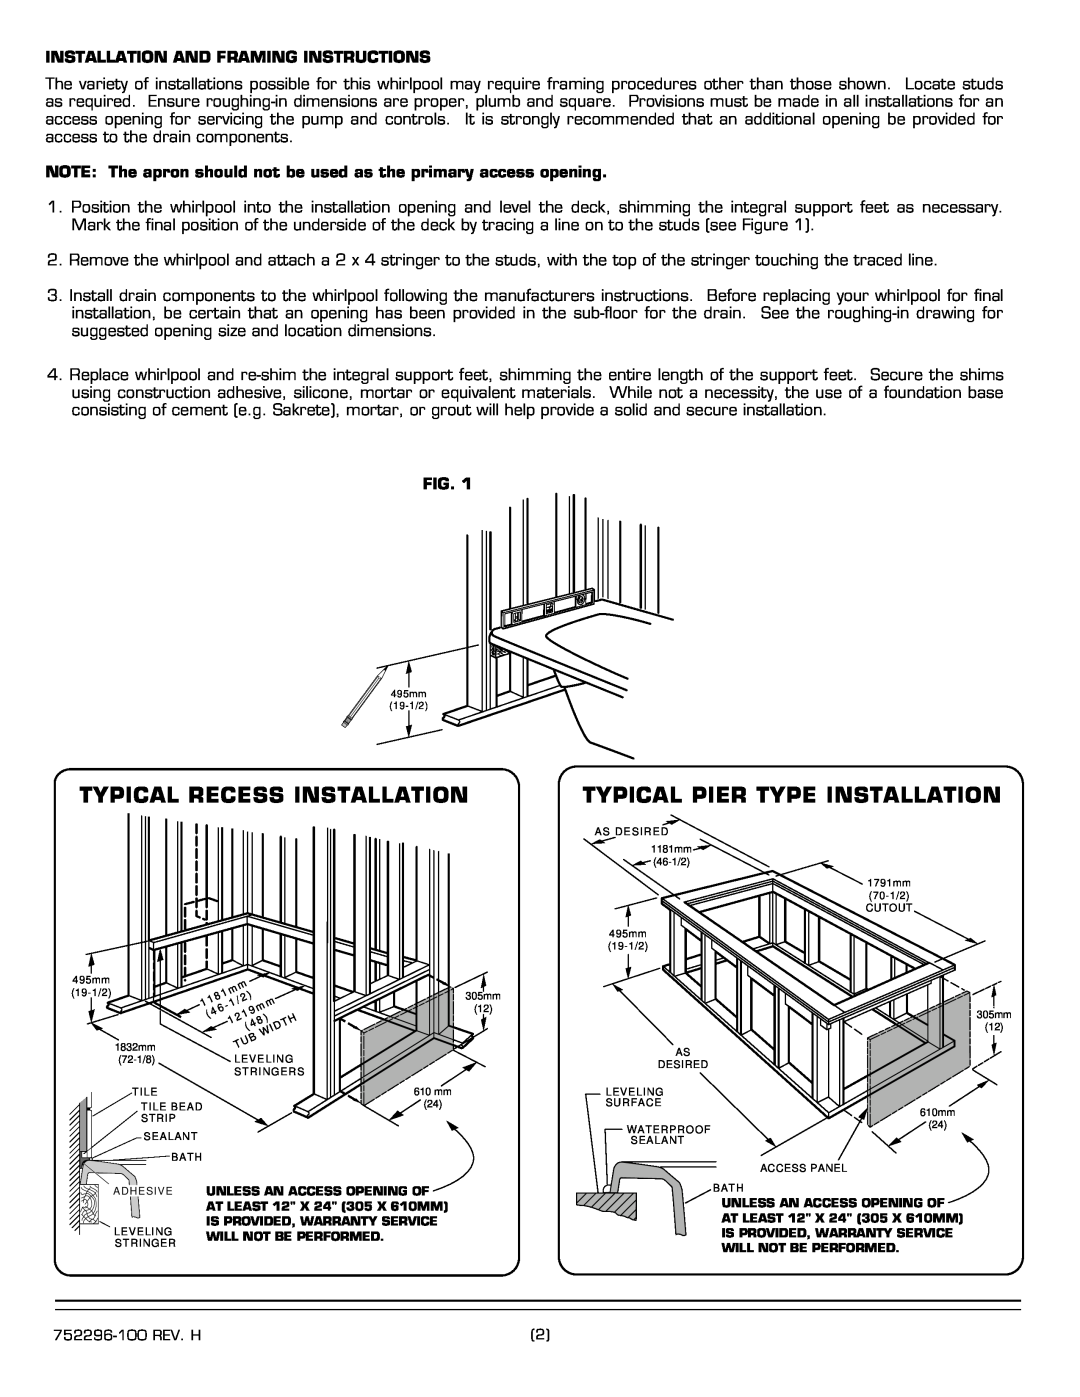 American Standard 2711.XXXW installation instructions Typical Recess Installation, Typical Pier Type Installation 